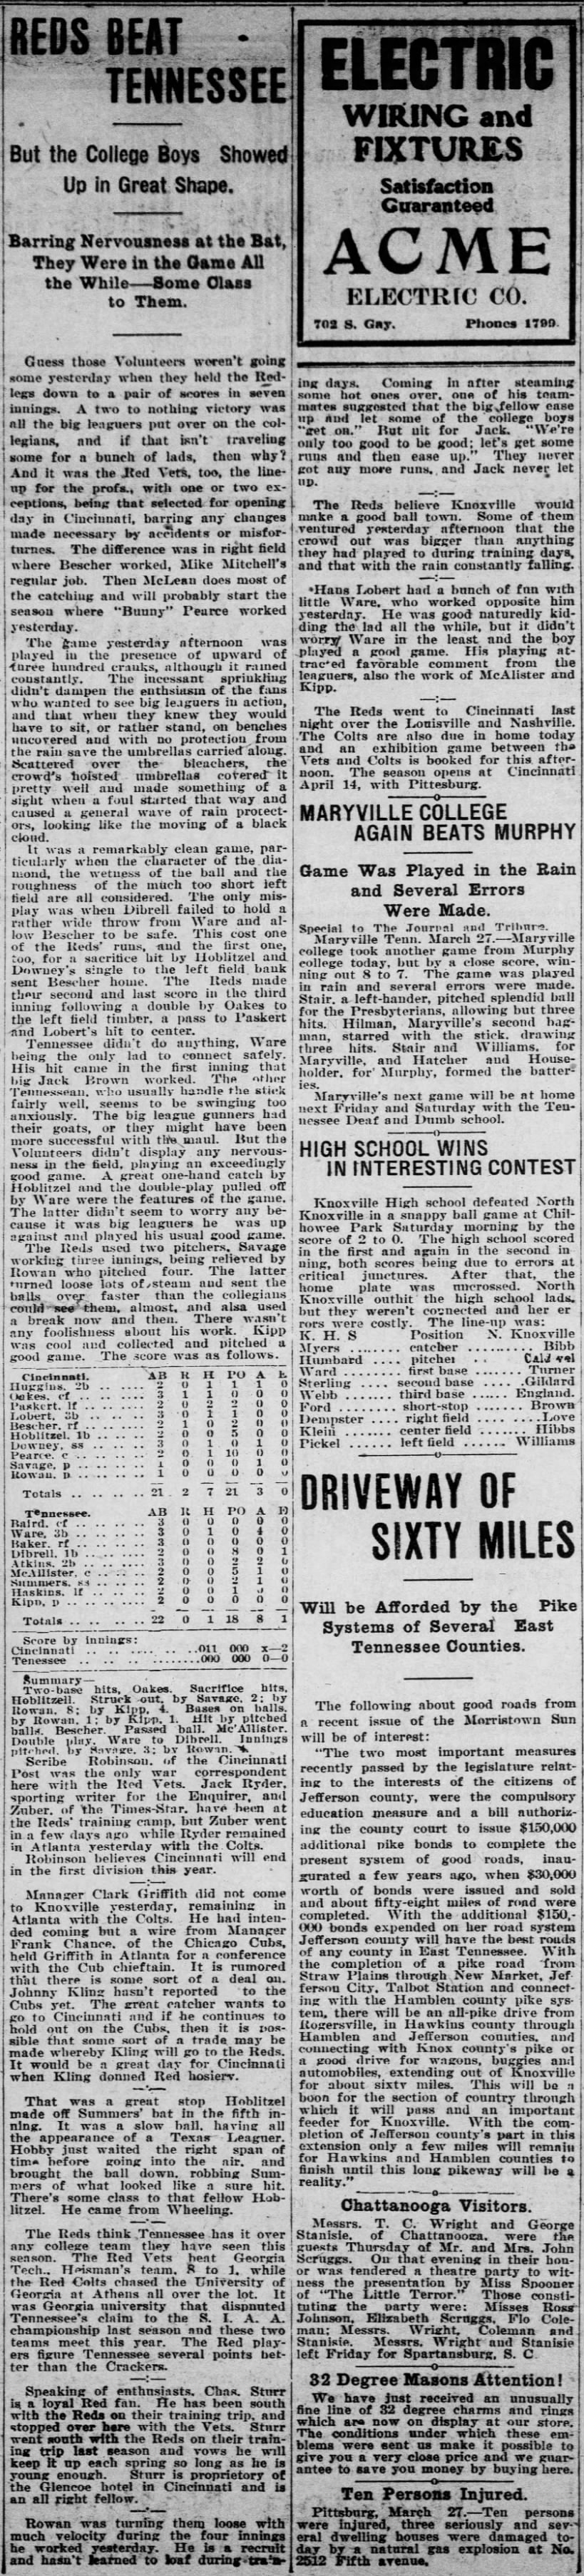 1909 - Cincinnati Reds defeat UT in exhibition game